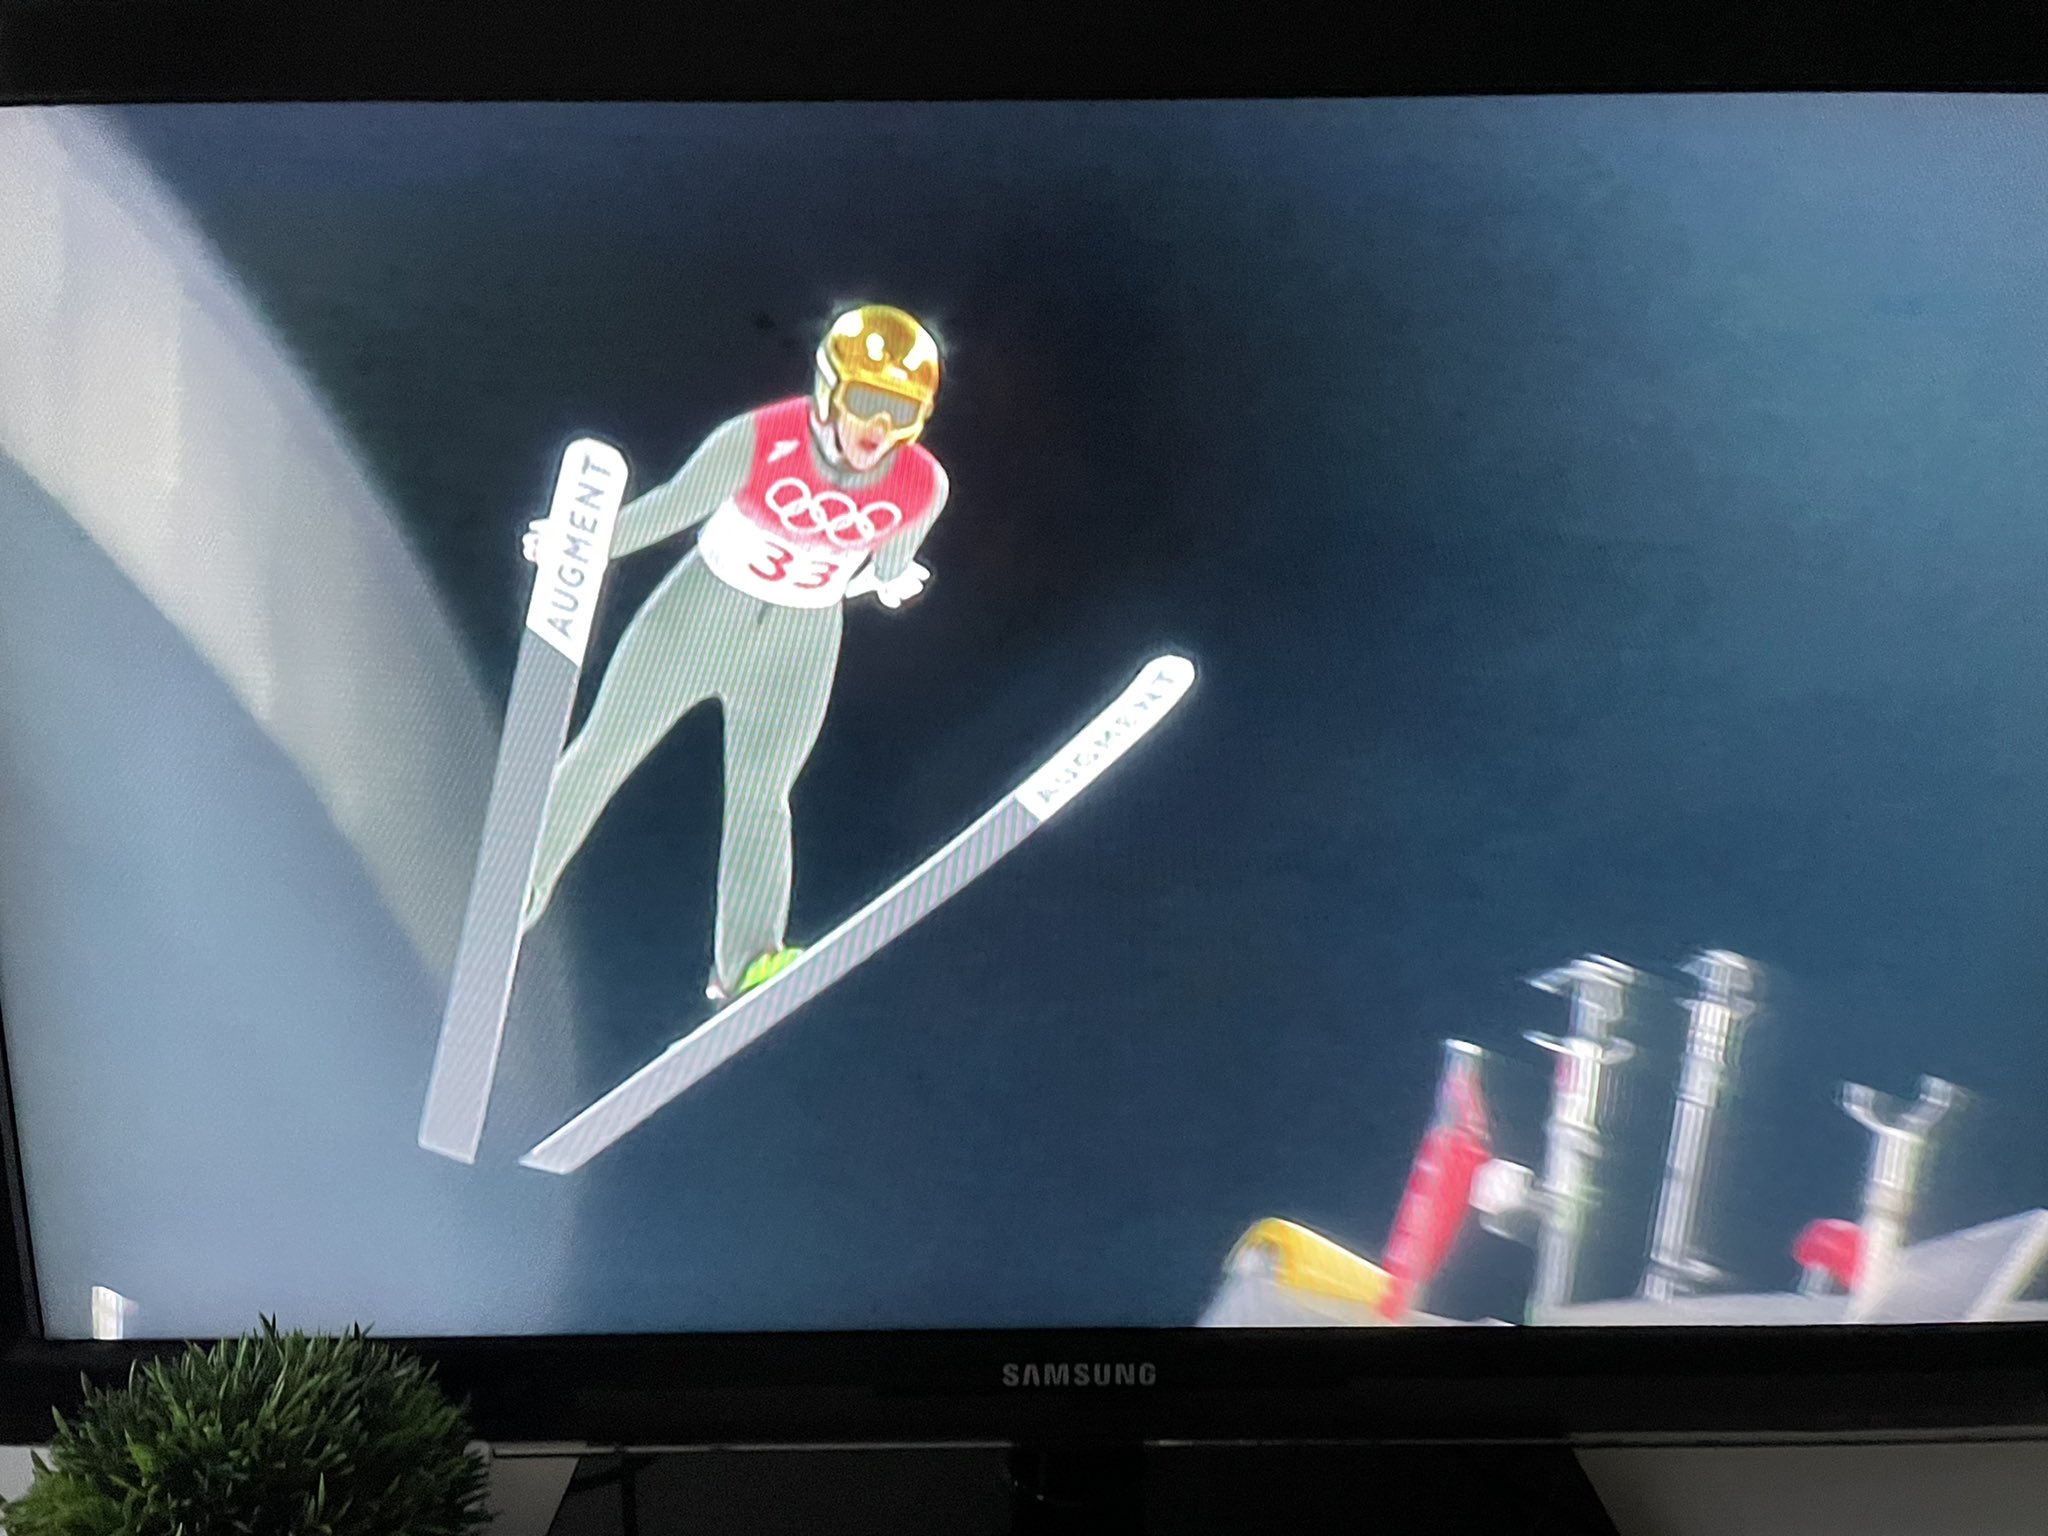 ski jumping on tv